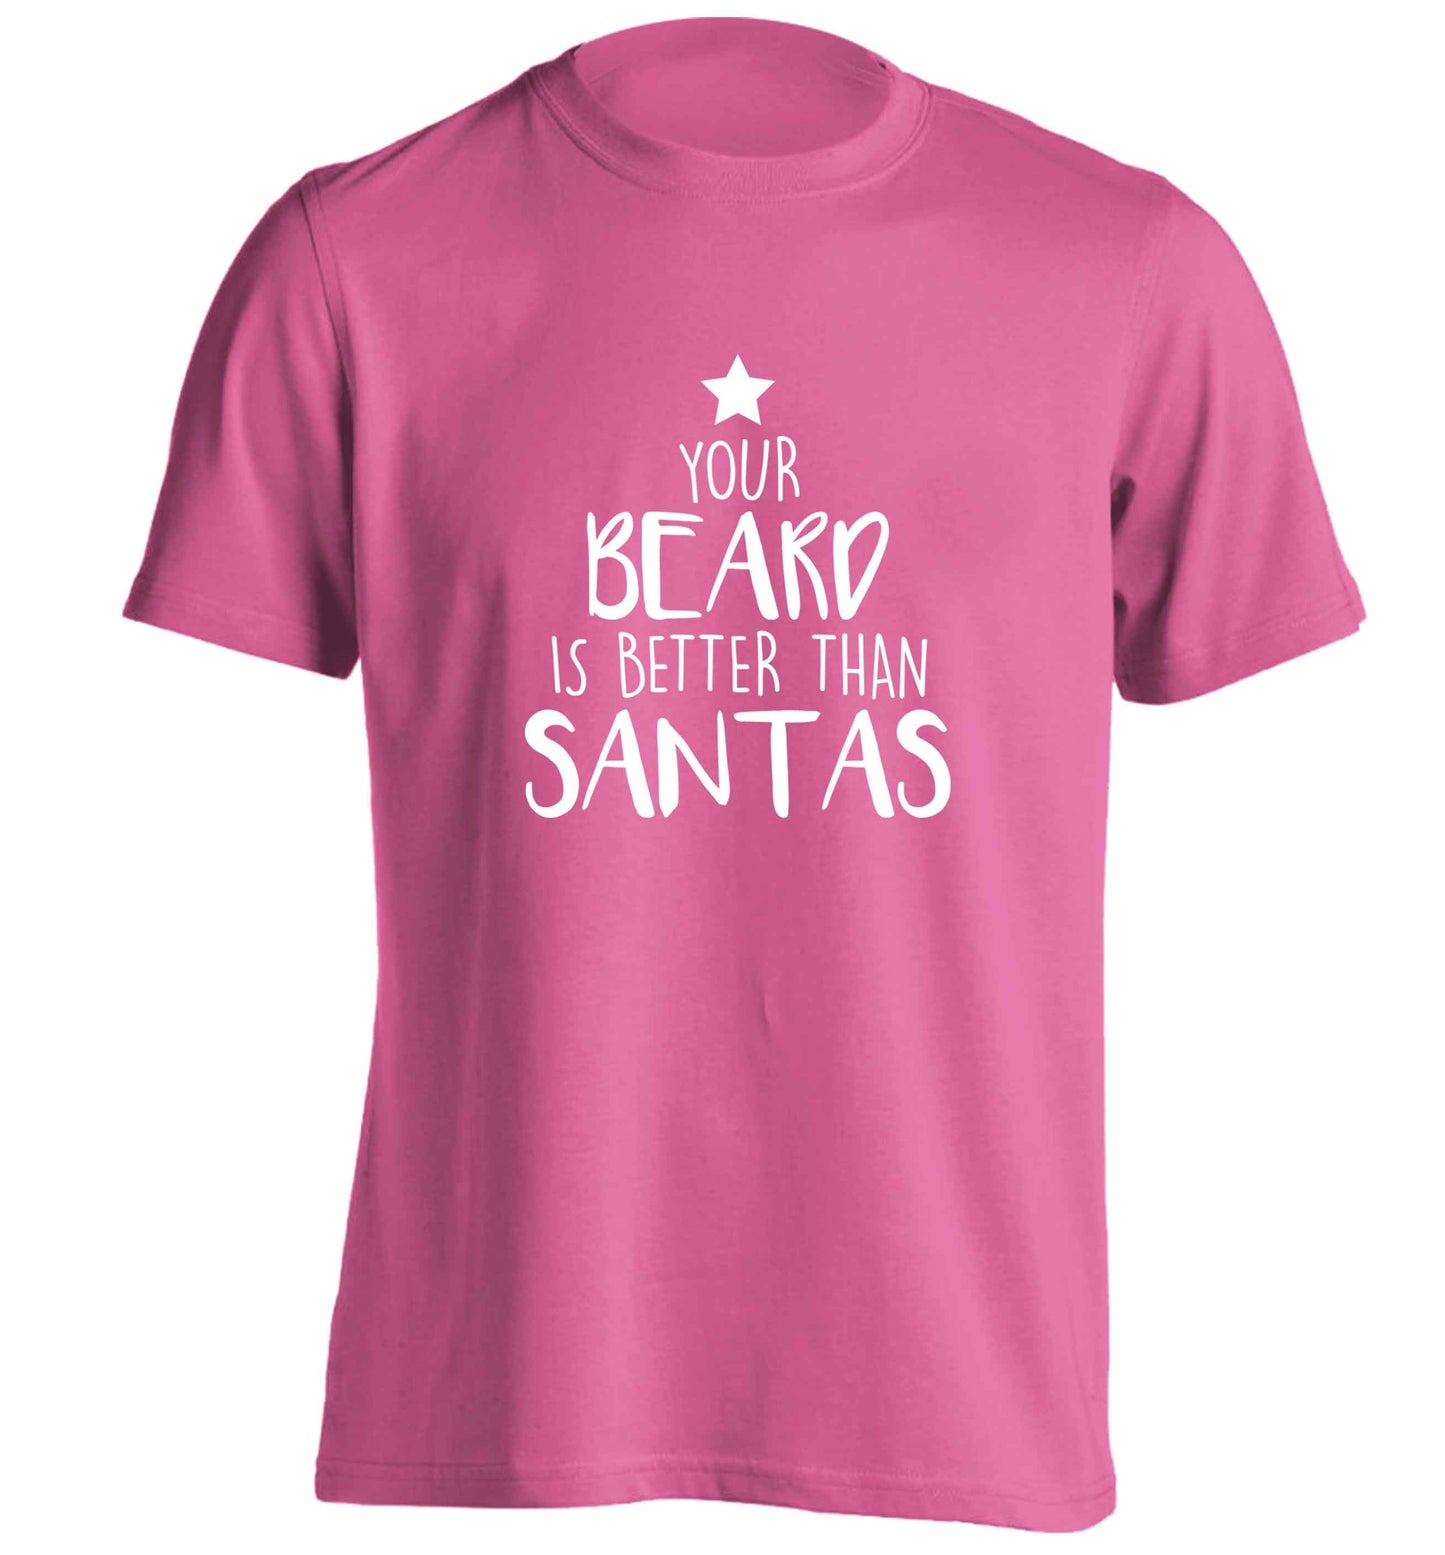 Your Beard Better than Santas adults unisex pink Tshirt 2XL